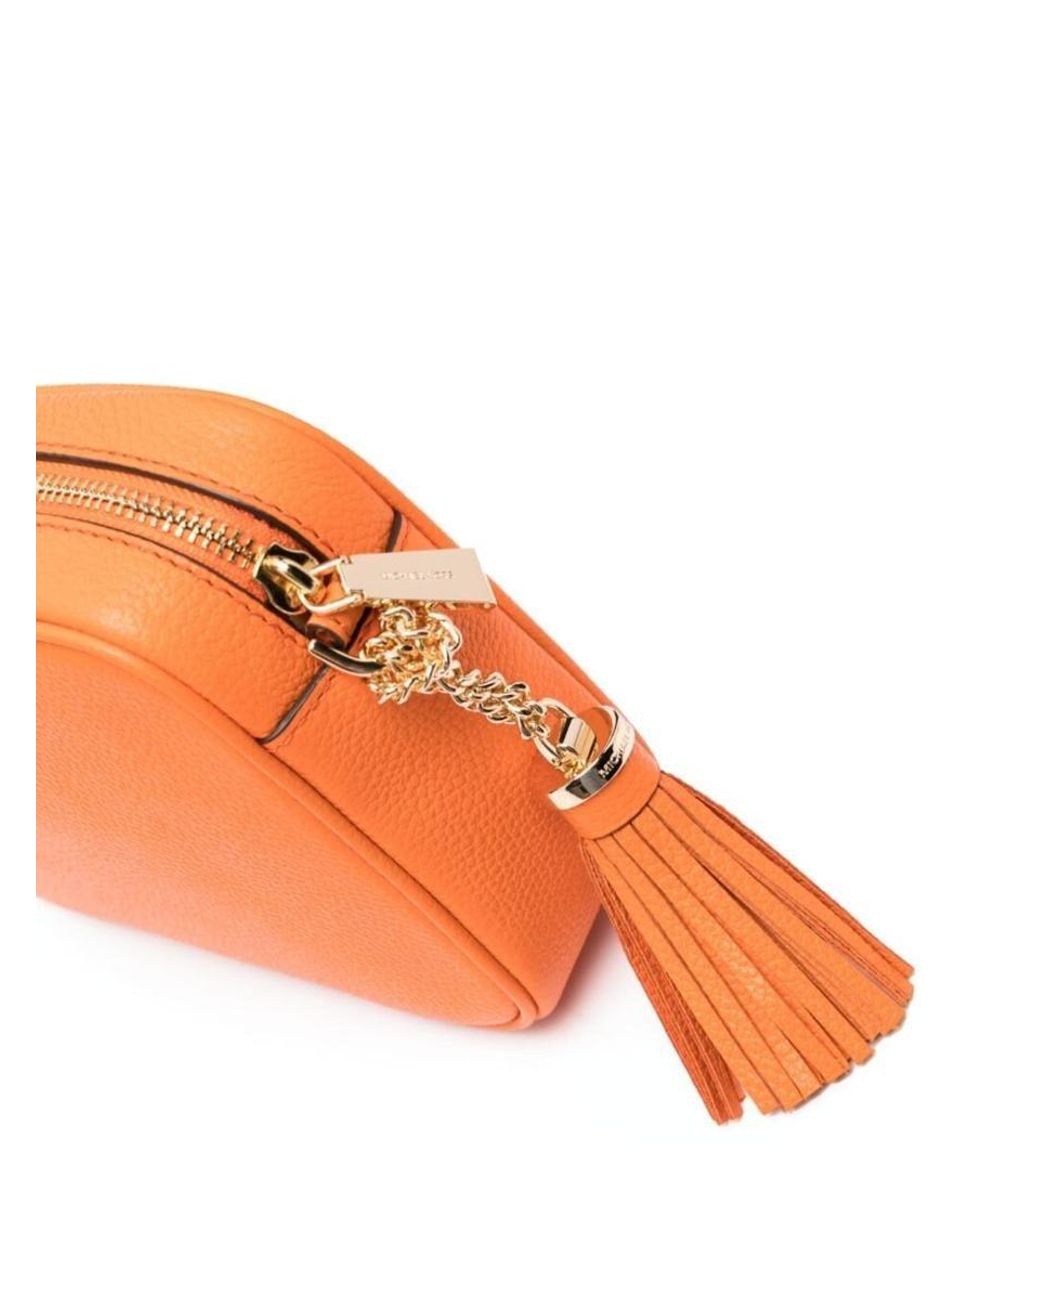 Michael Kors Bag For Women,Orange - Crossbody bags, Orange, Size